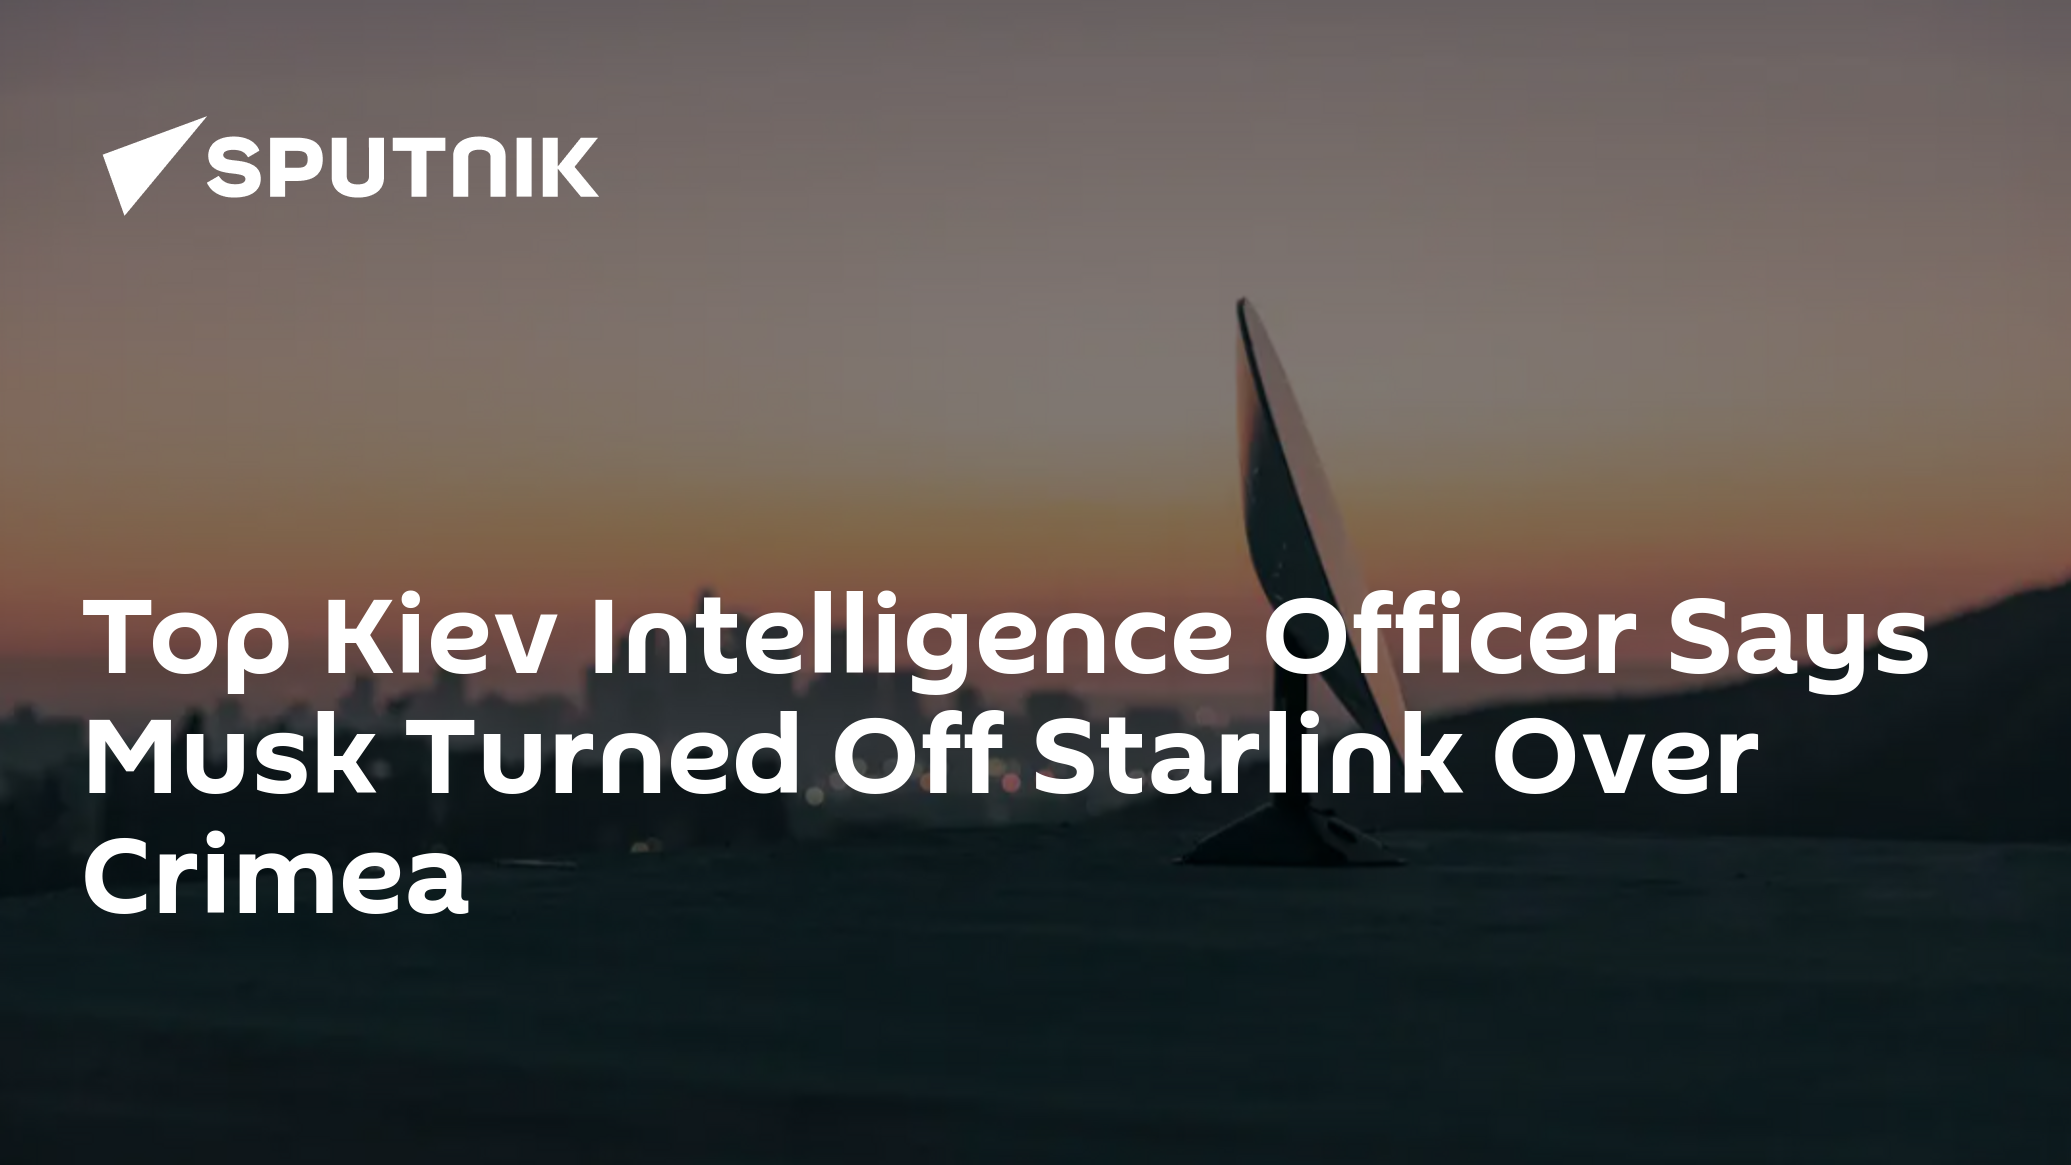 Top Kiev Intelligence Officer Says Musk Turned Off Starlink Over Crimea